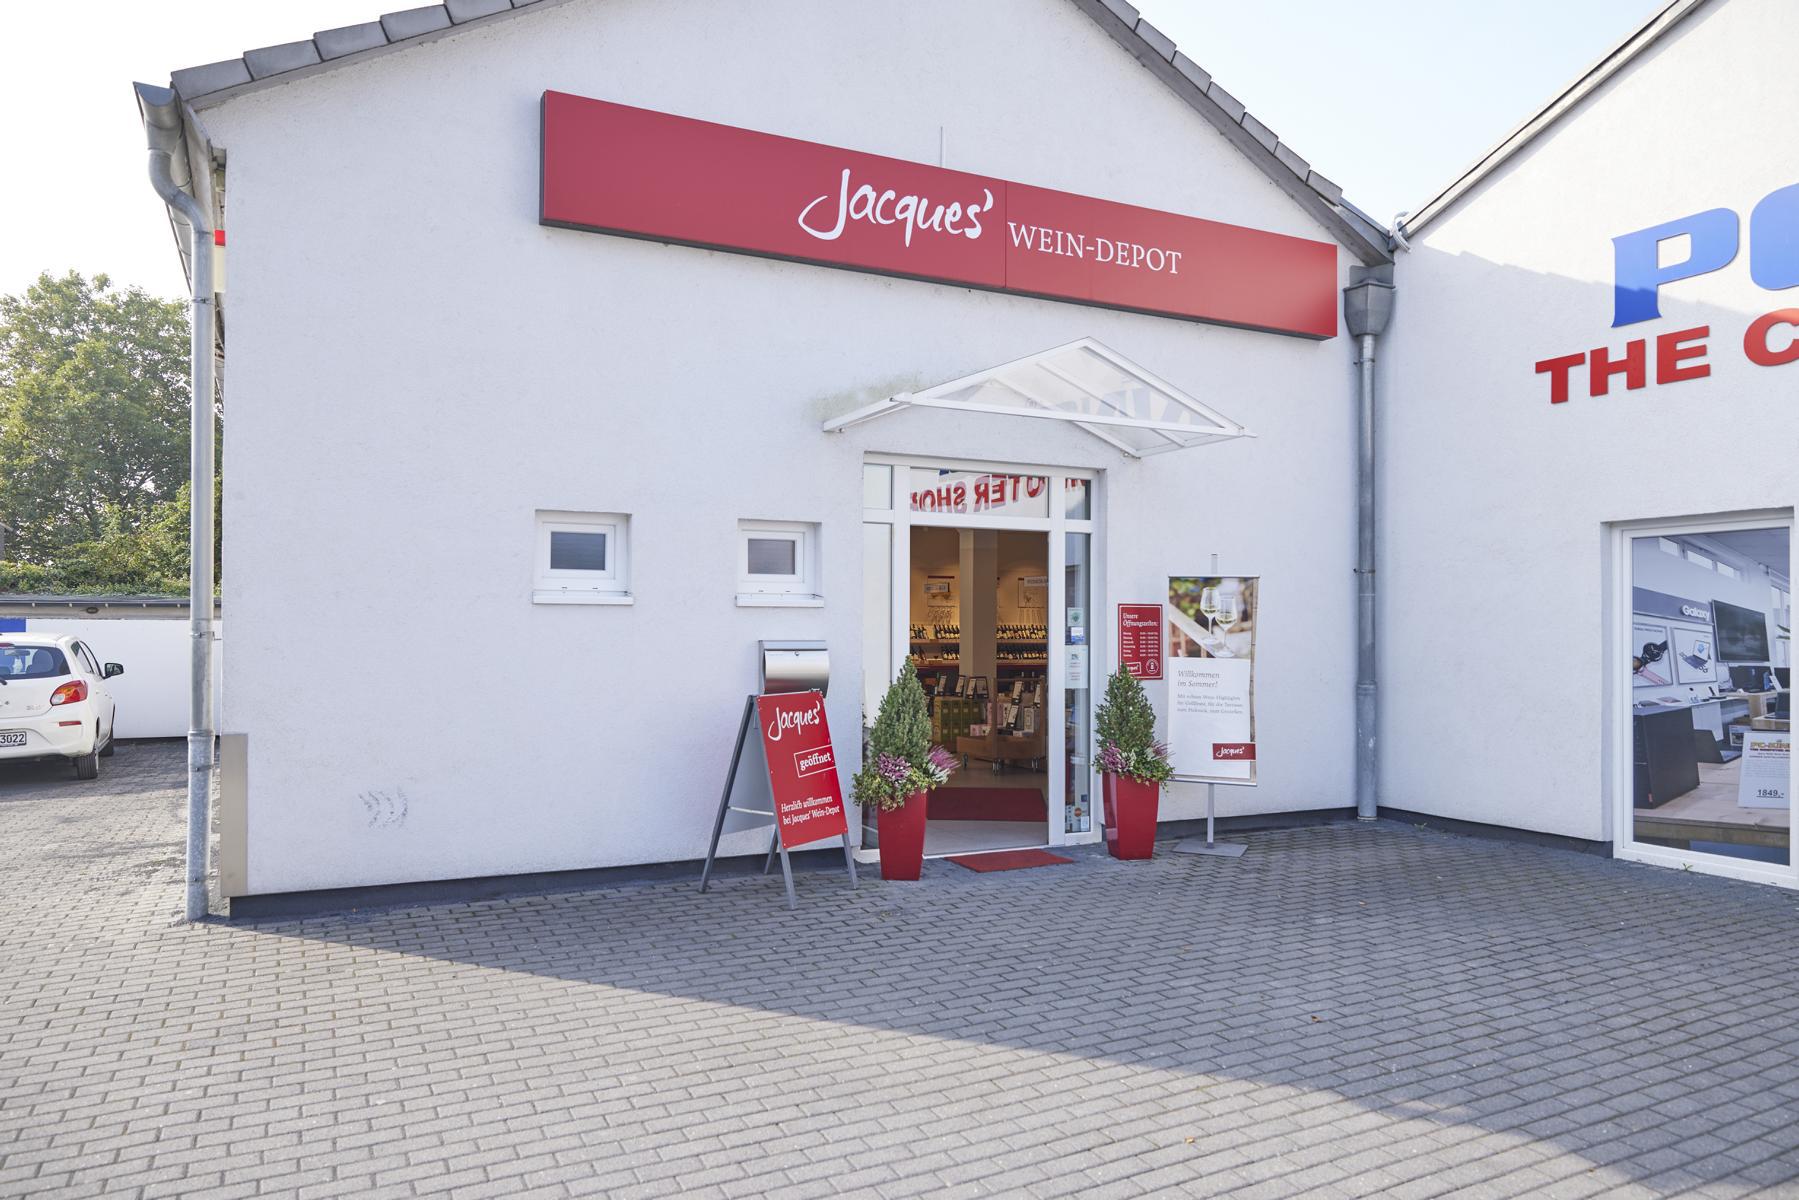 Jacques’ Wein-Depot Siegburg, Luisenstraße 86a in Siegburg